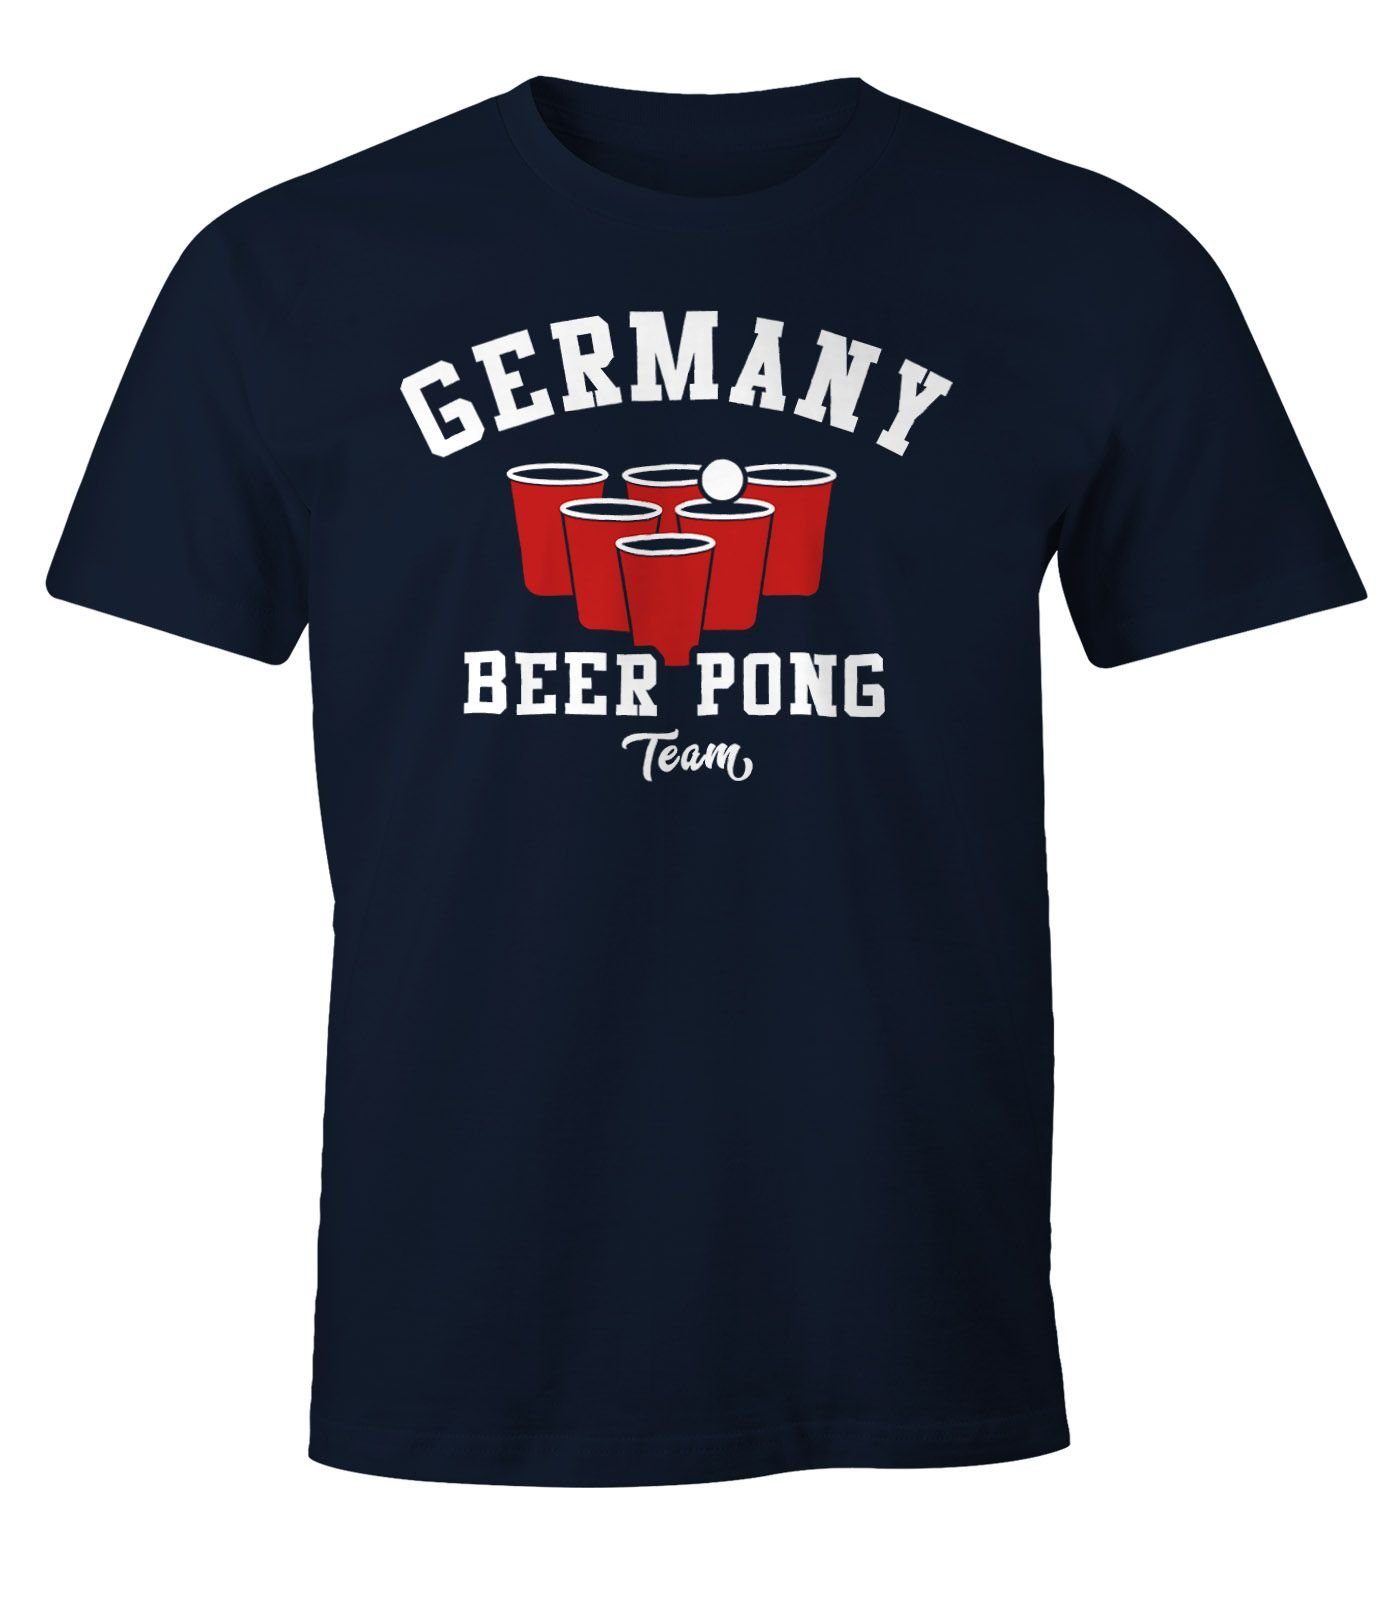 Moonworks® Fun-Shirt Team T-Shirt Herren Germany mit Print-Shirt Bier navy MoonWorks Print Beer Pong